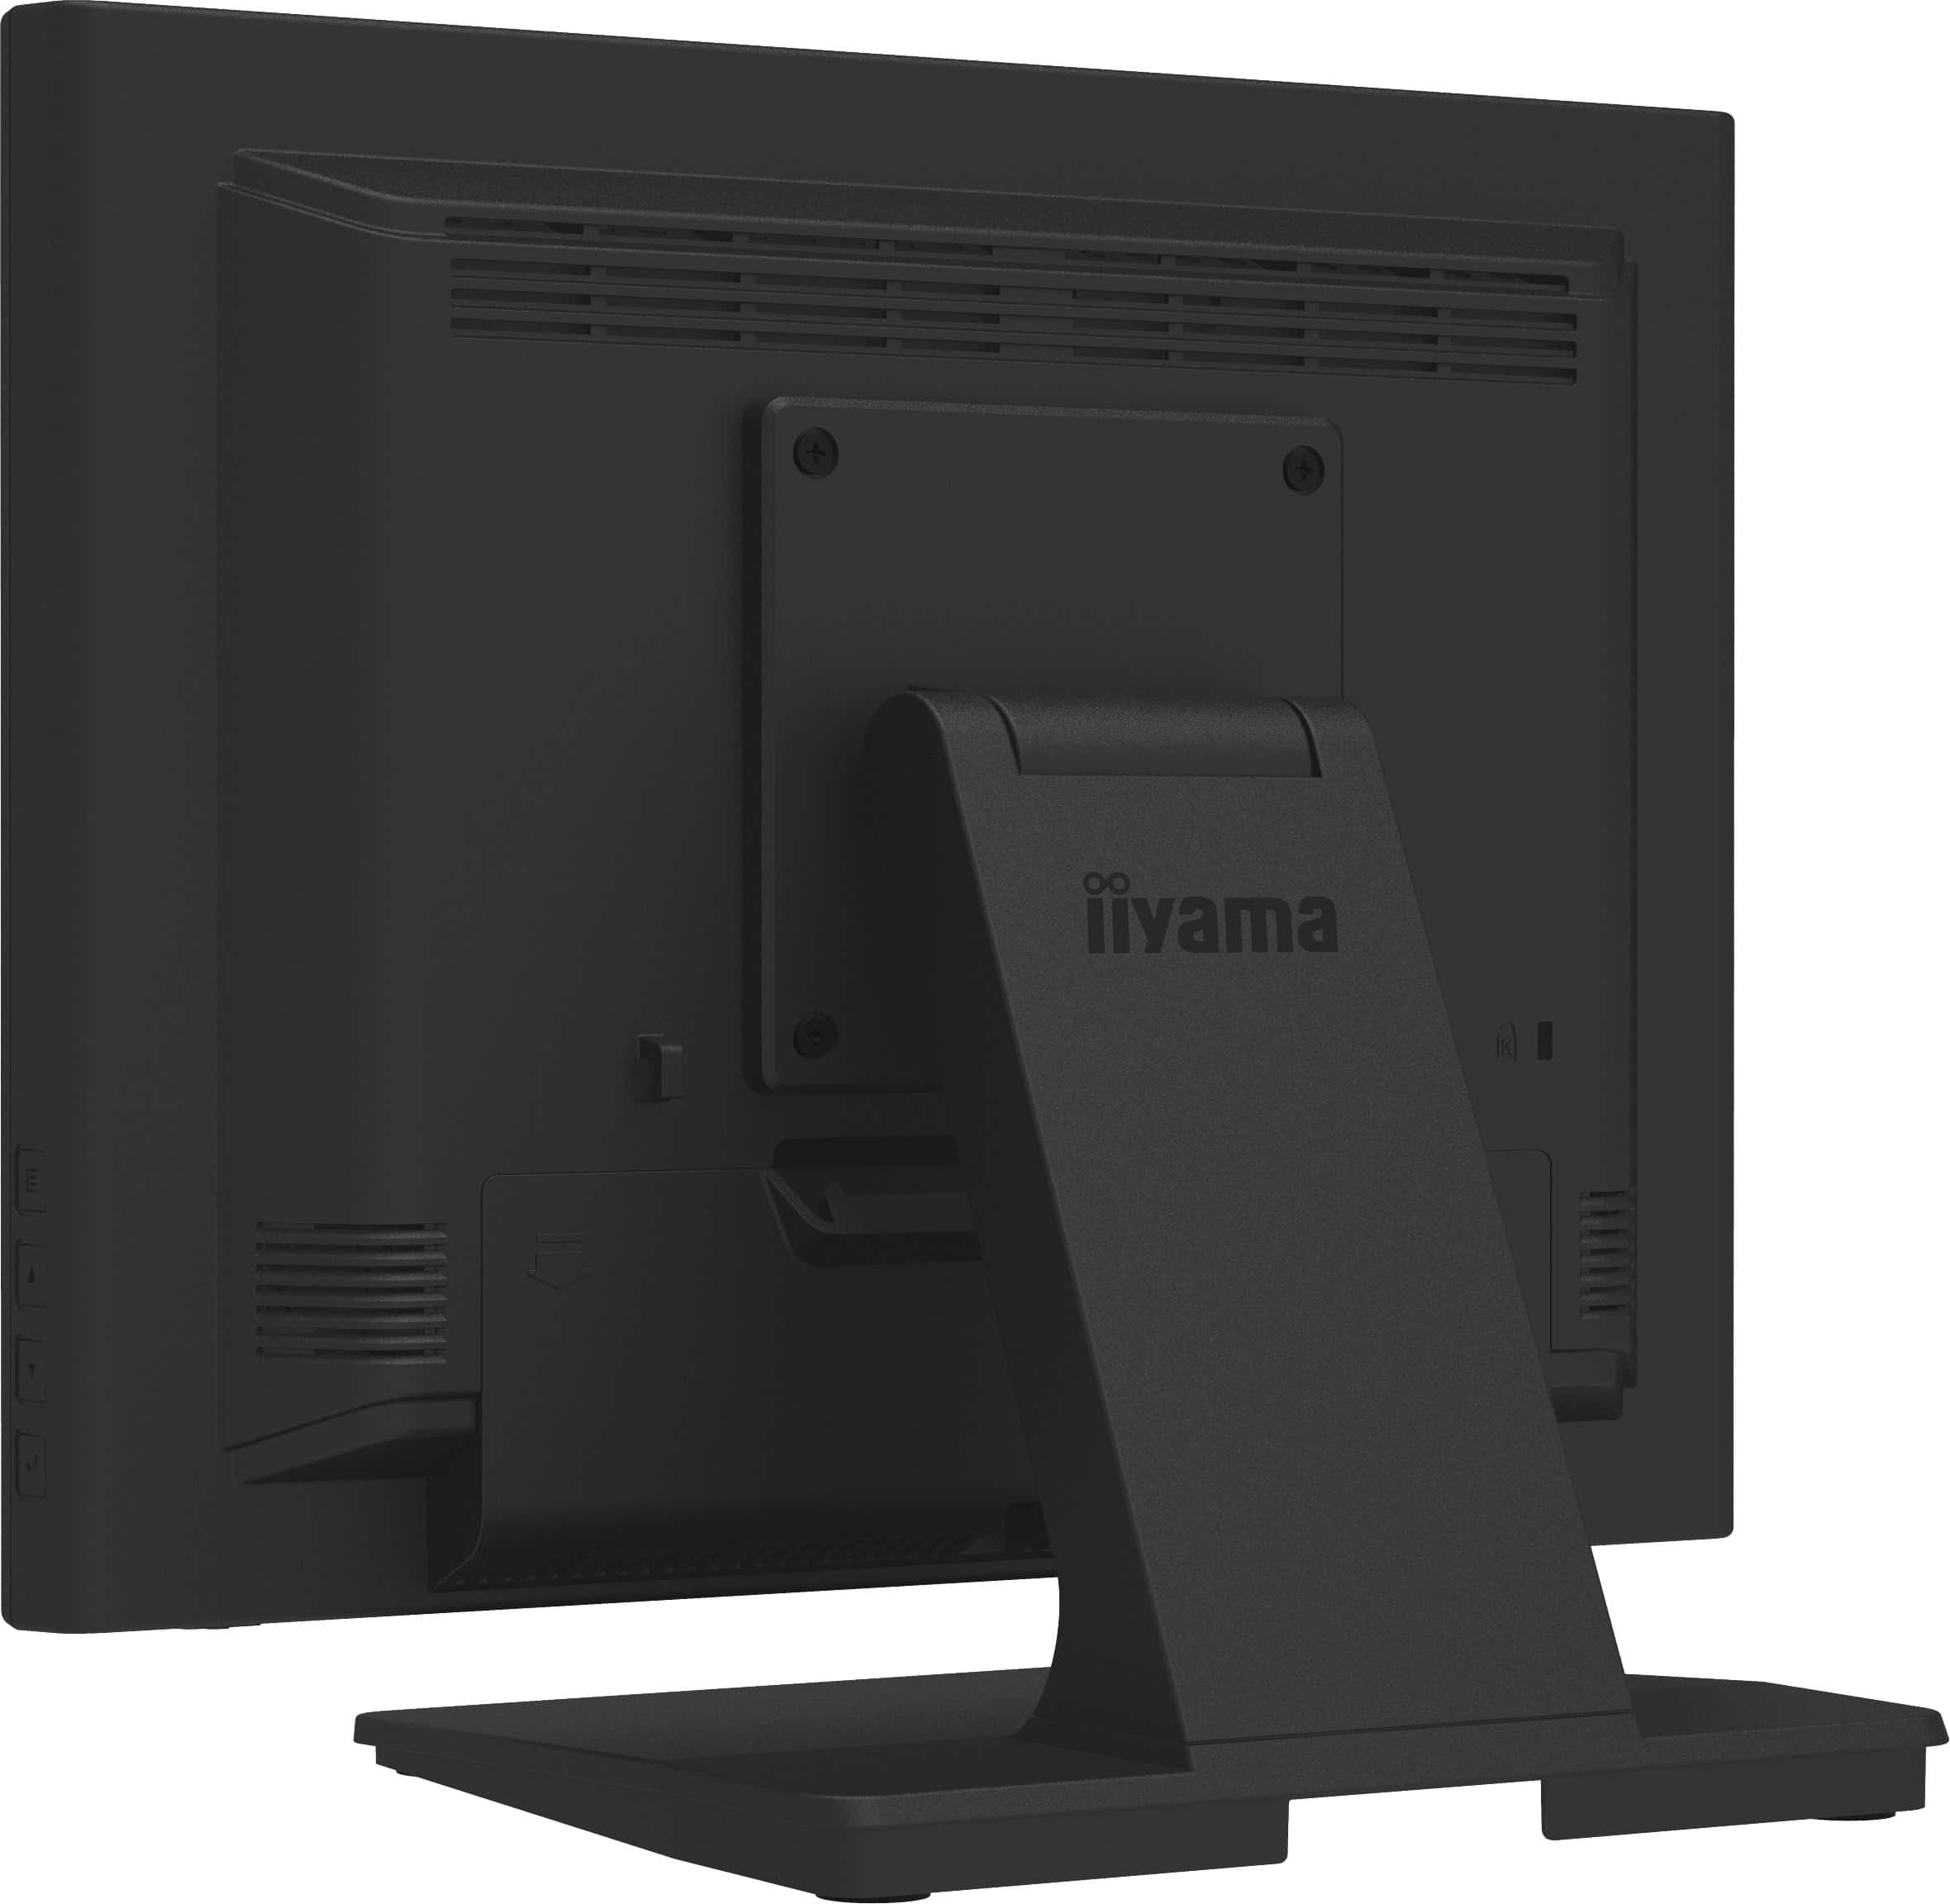 Iiyama ProLite T1532MSC-B1S | 15" | Projected Capacitive 10pt Touchscreen